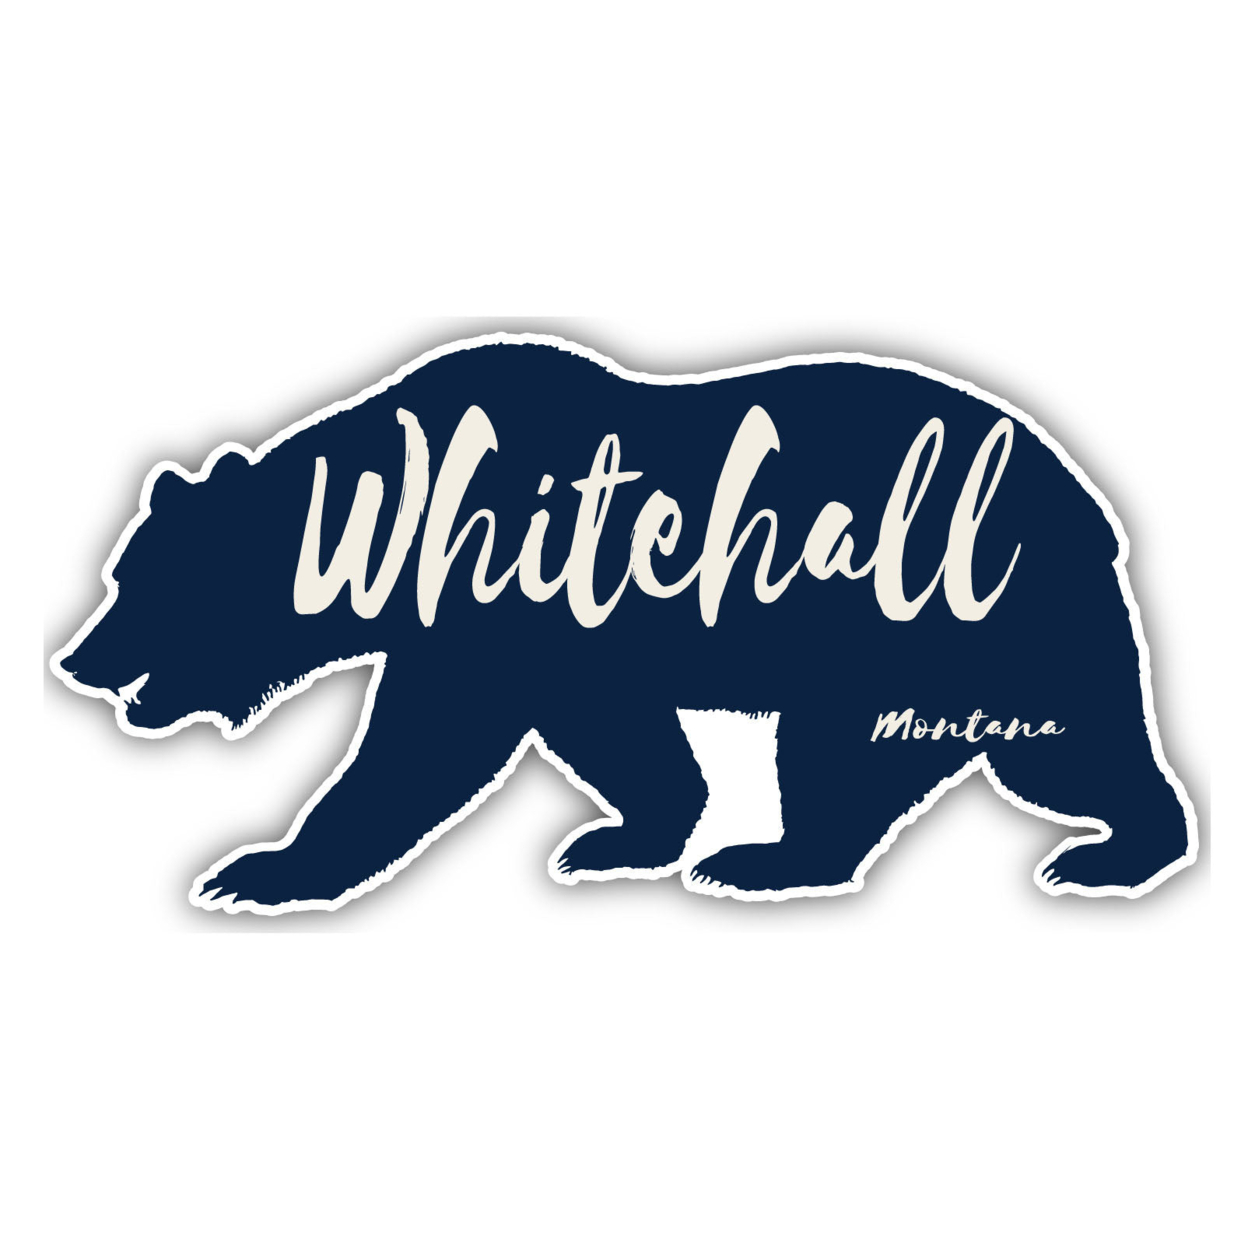 Whitehall Montana Souvenir Decorative Stickers (Choose Theme And Size) - Single Unit, 2-Inch, Bear